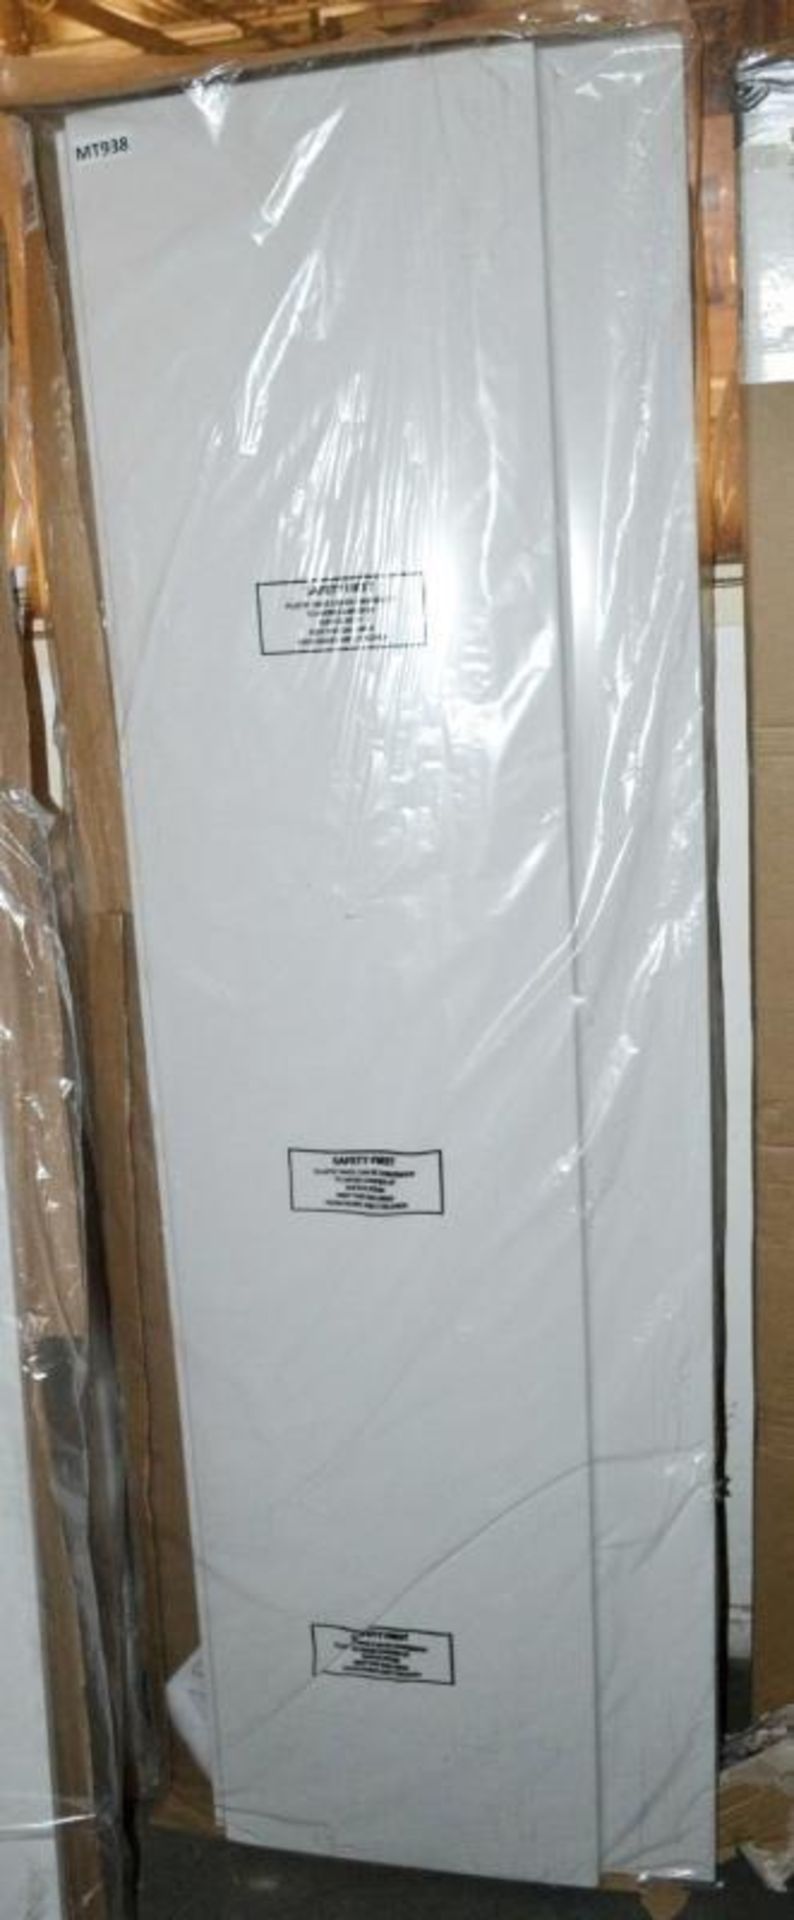 1 x 1700 Styrene Front Bath Panel (CPNL1700) - Dimensions: W1700 x 53 x 2mm - New / Unused Stock - R